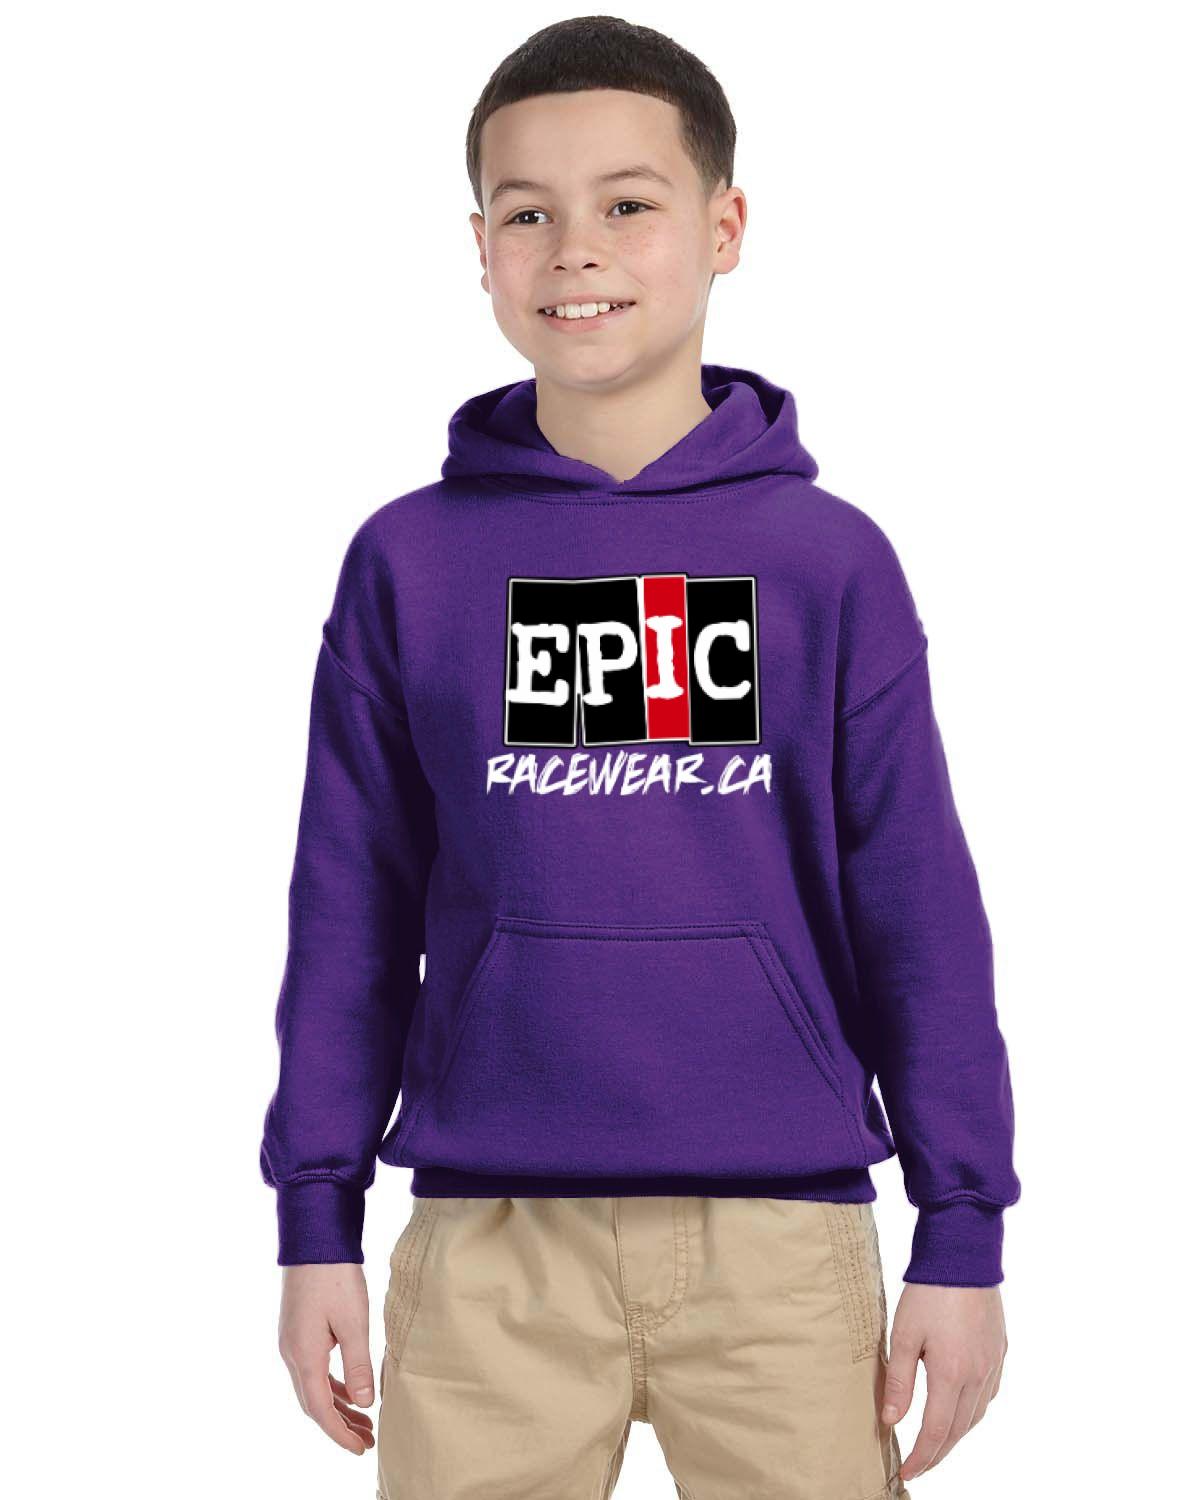 EPIC Racewear Youth Hoodie